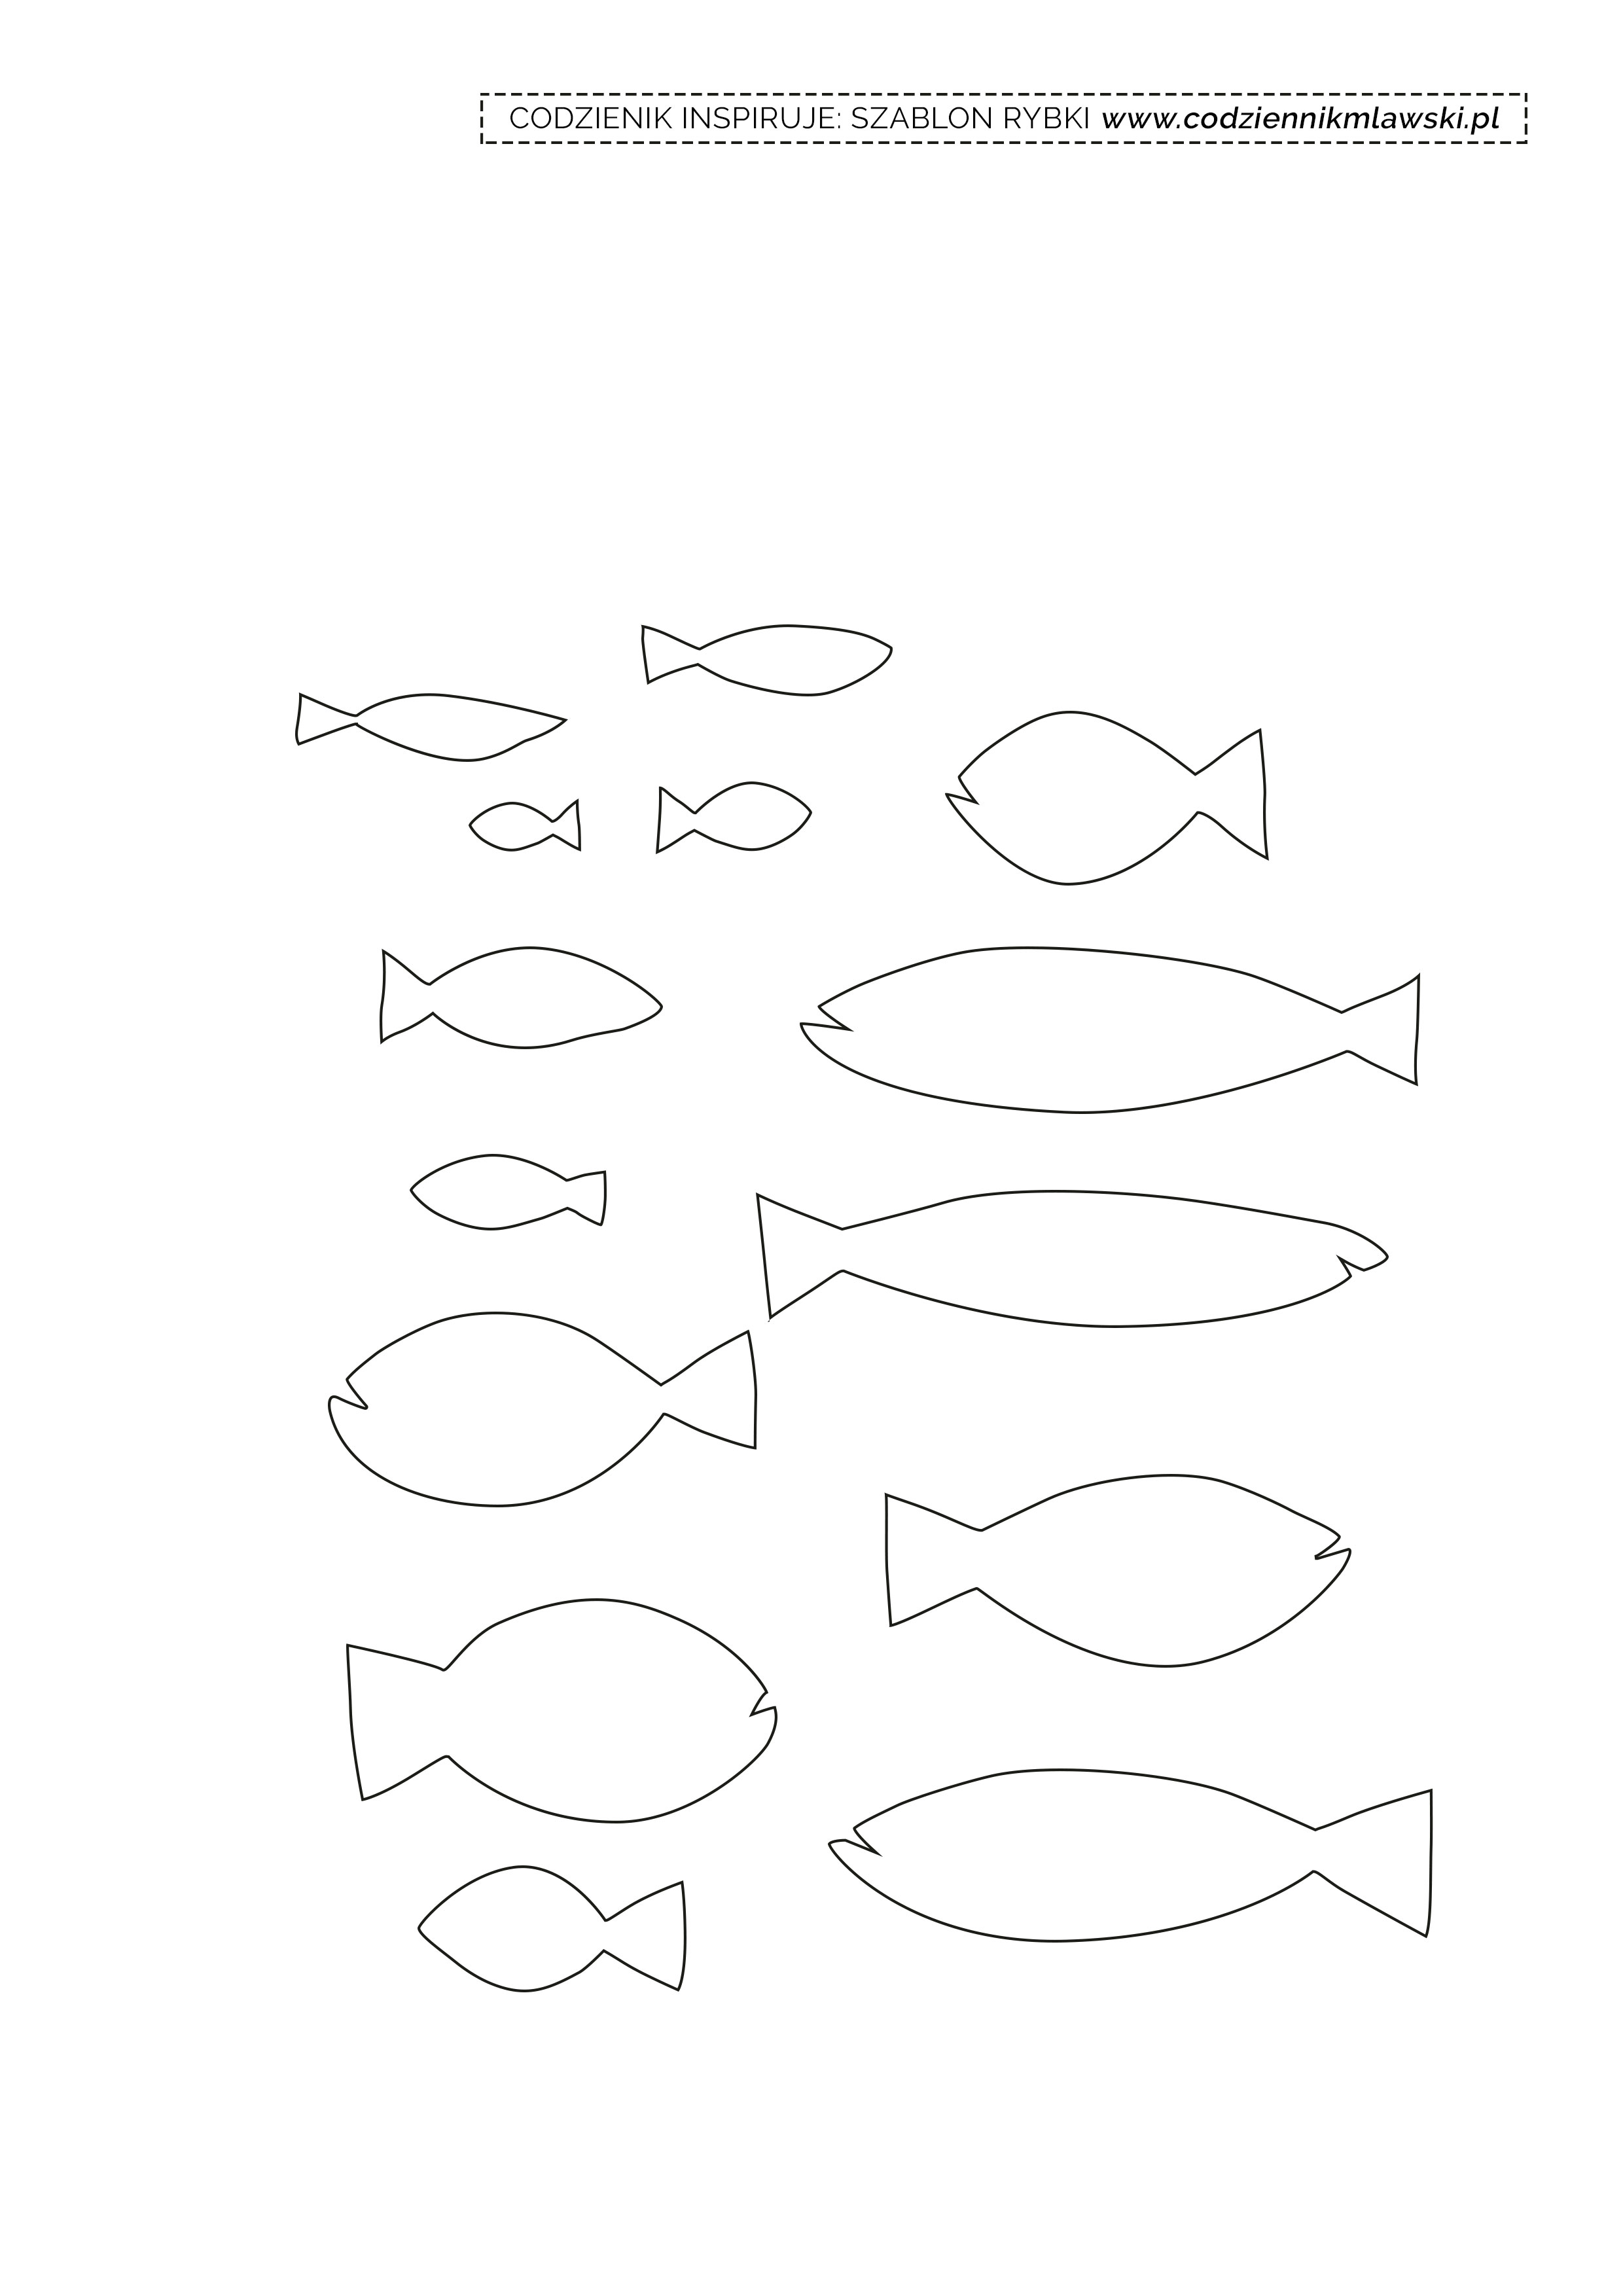 szablon-rybki-codziennik-mlawski